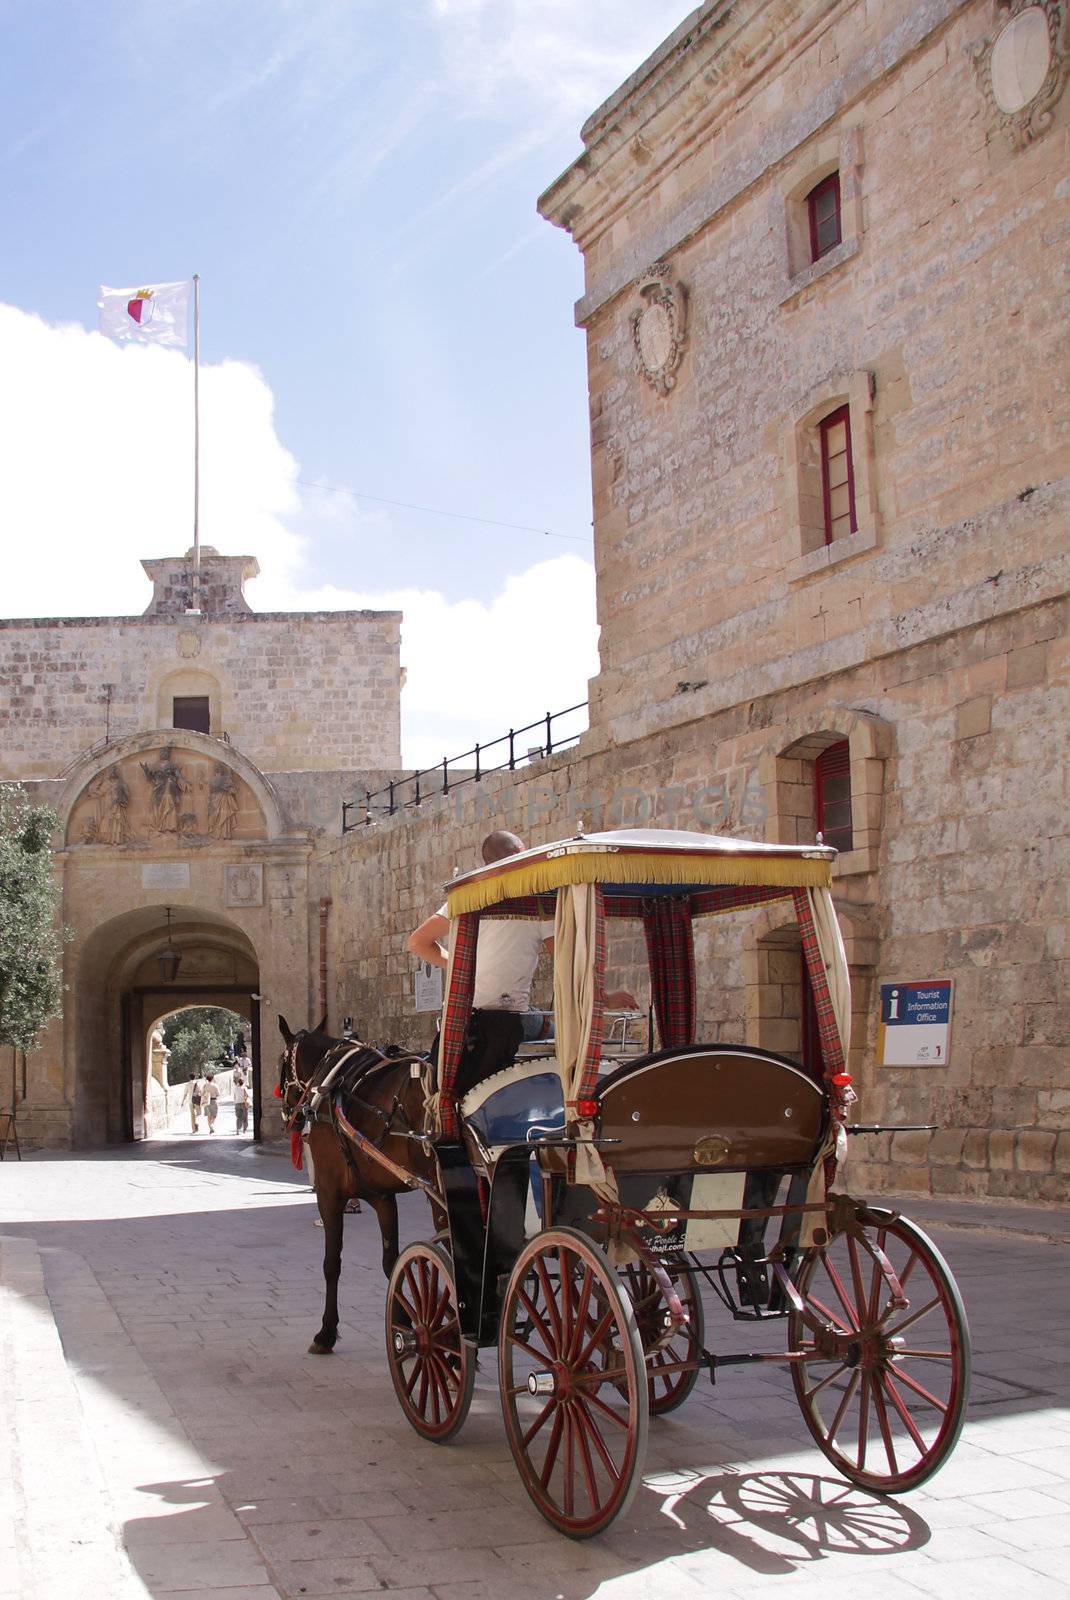 Horse cart in Mdina, Malta by annems